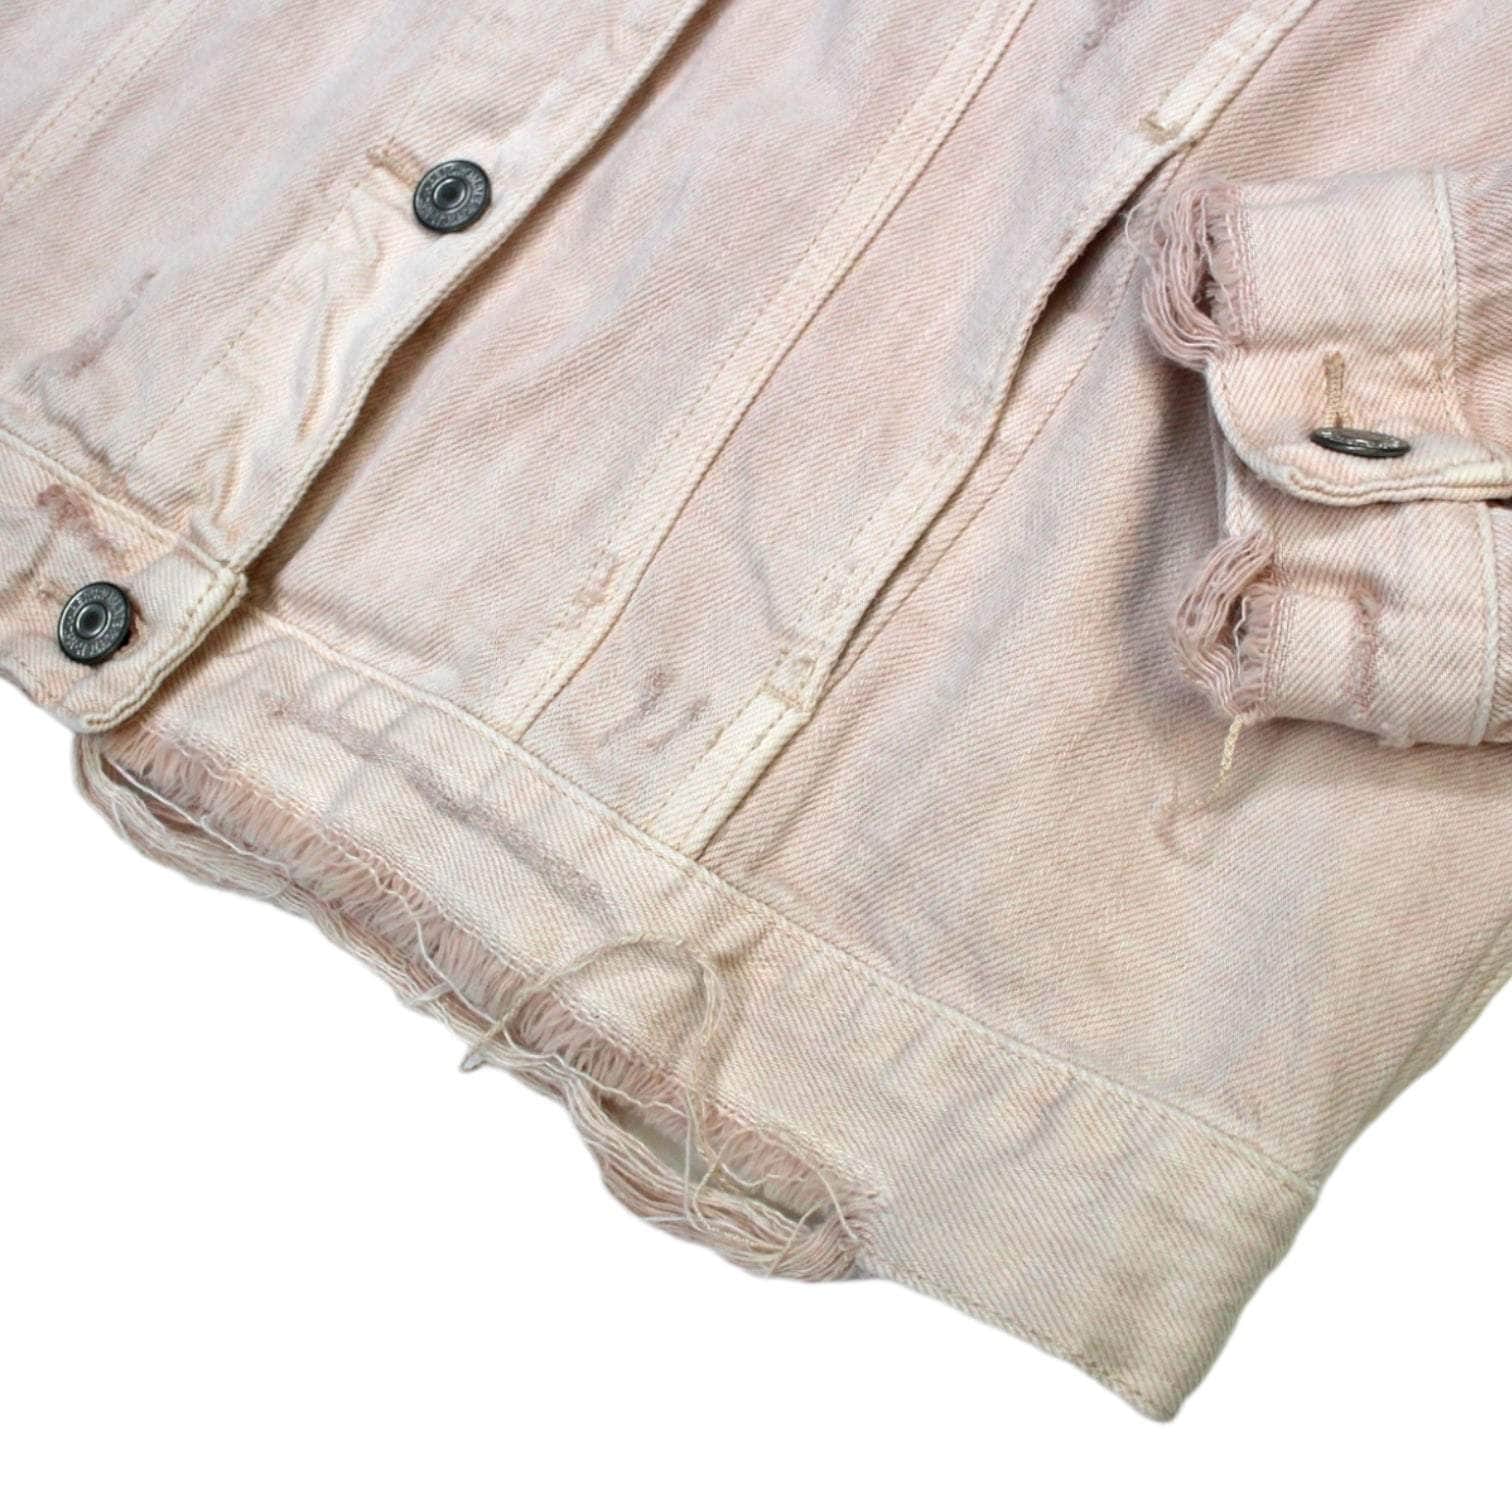 Abercrombie & Fitch Pink Denim Jeans Jacket